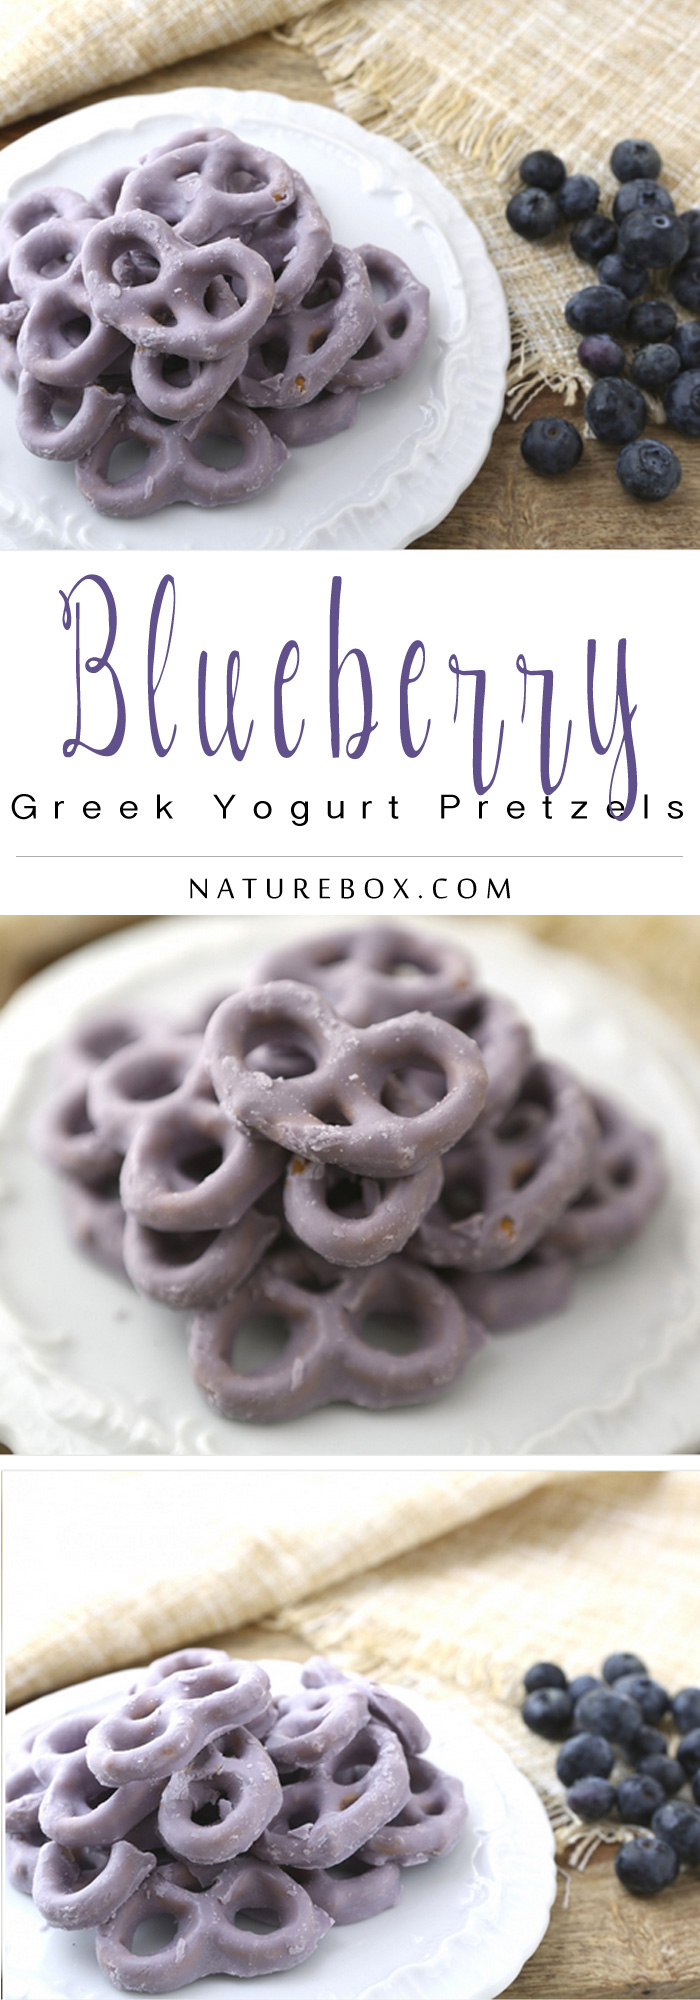 Everly-Blueberry-Greek-Yogurt